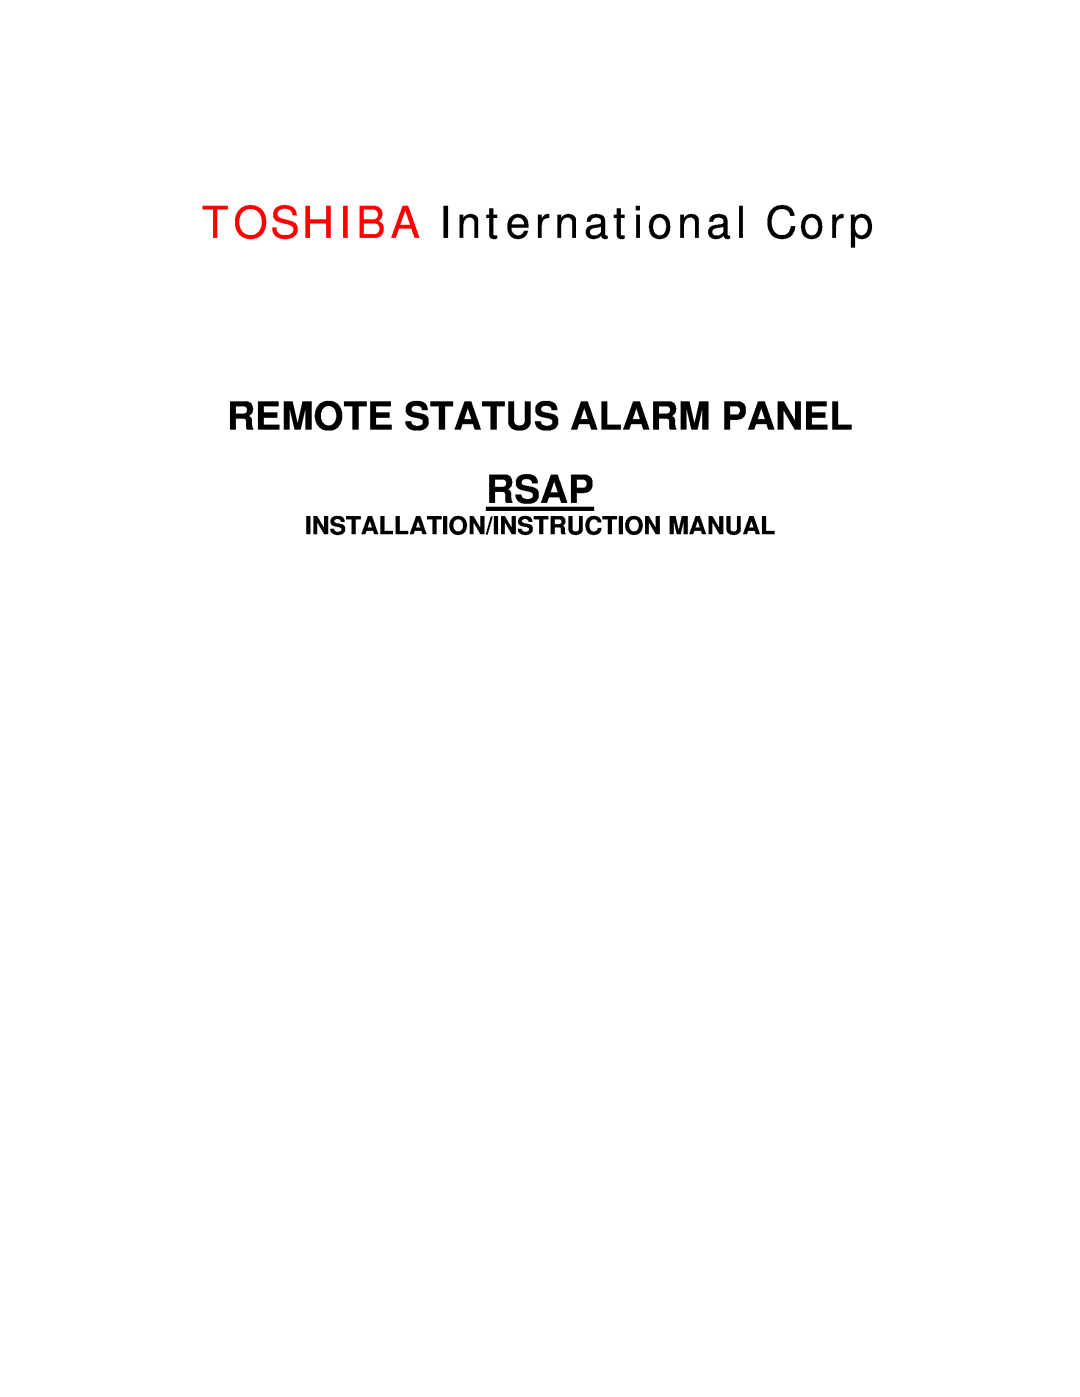 Toshiba RSAP instruction manual TOSHIBA International Corp, Remote Status Alarm Panel Rsap 